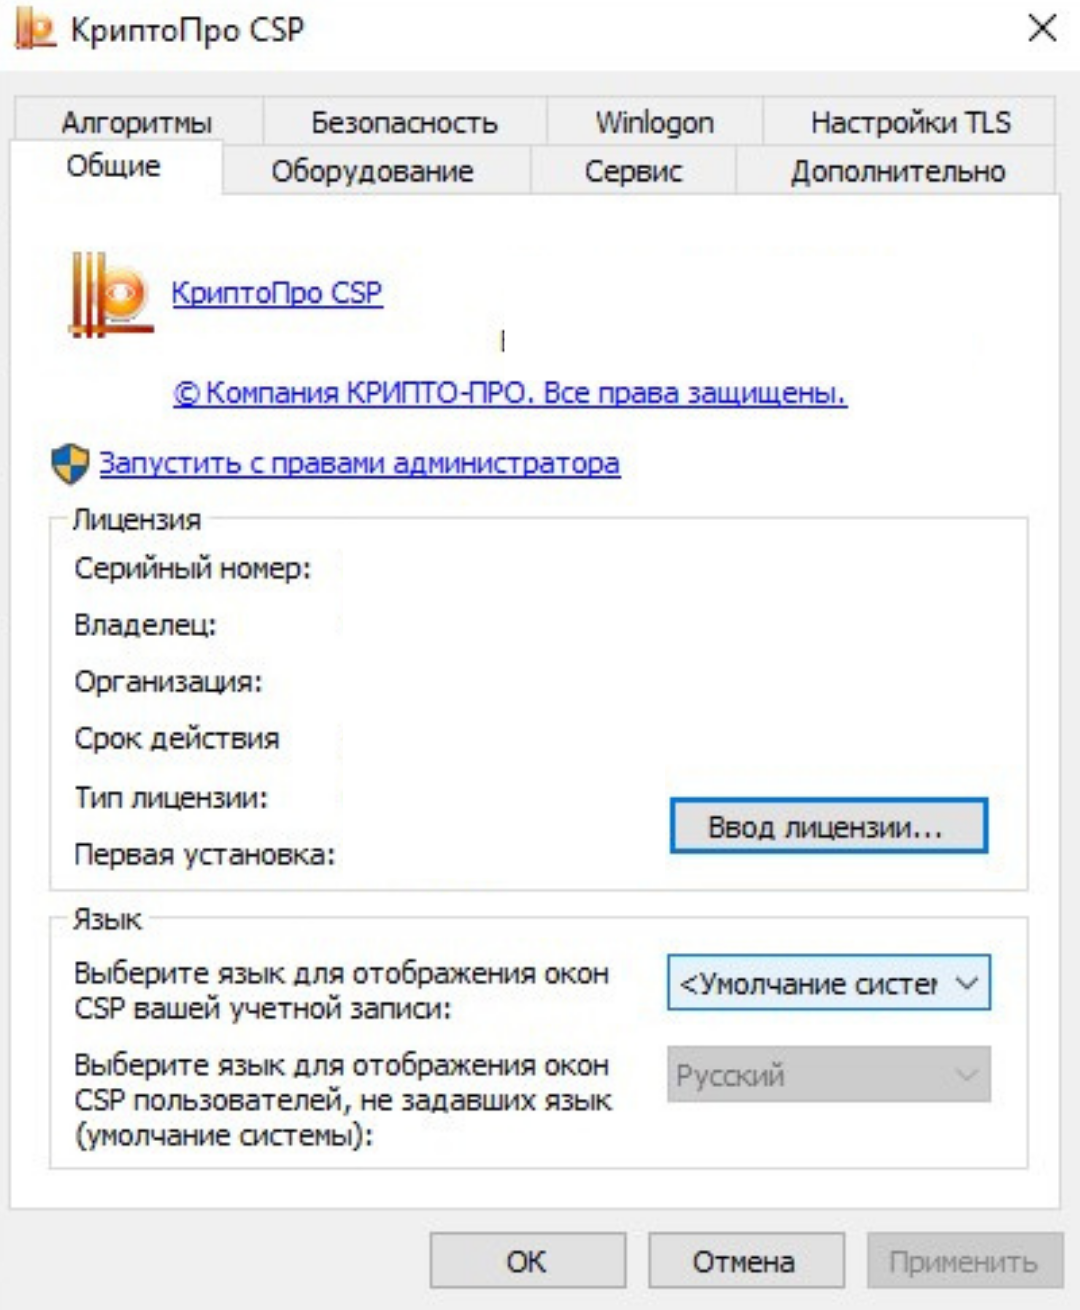 Cryptopro ru products csp downloads